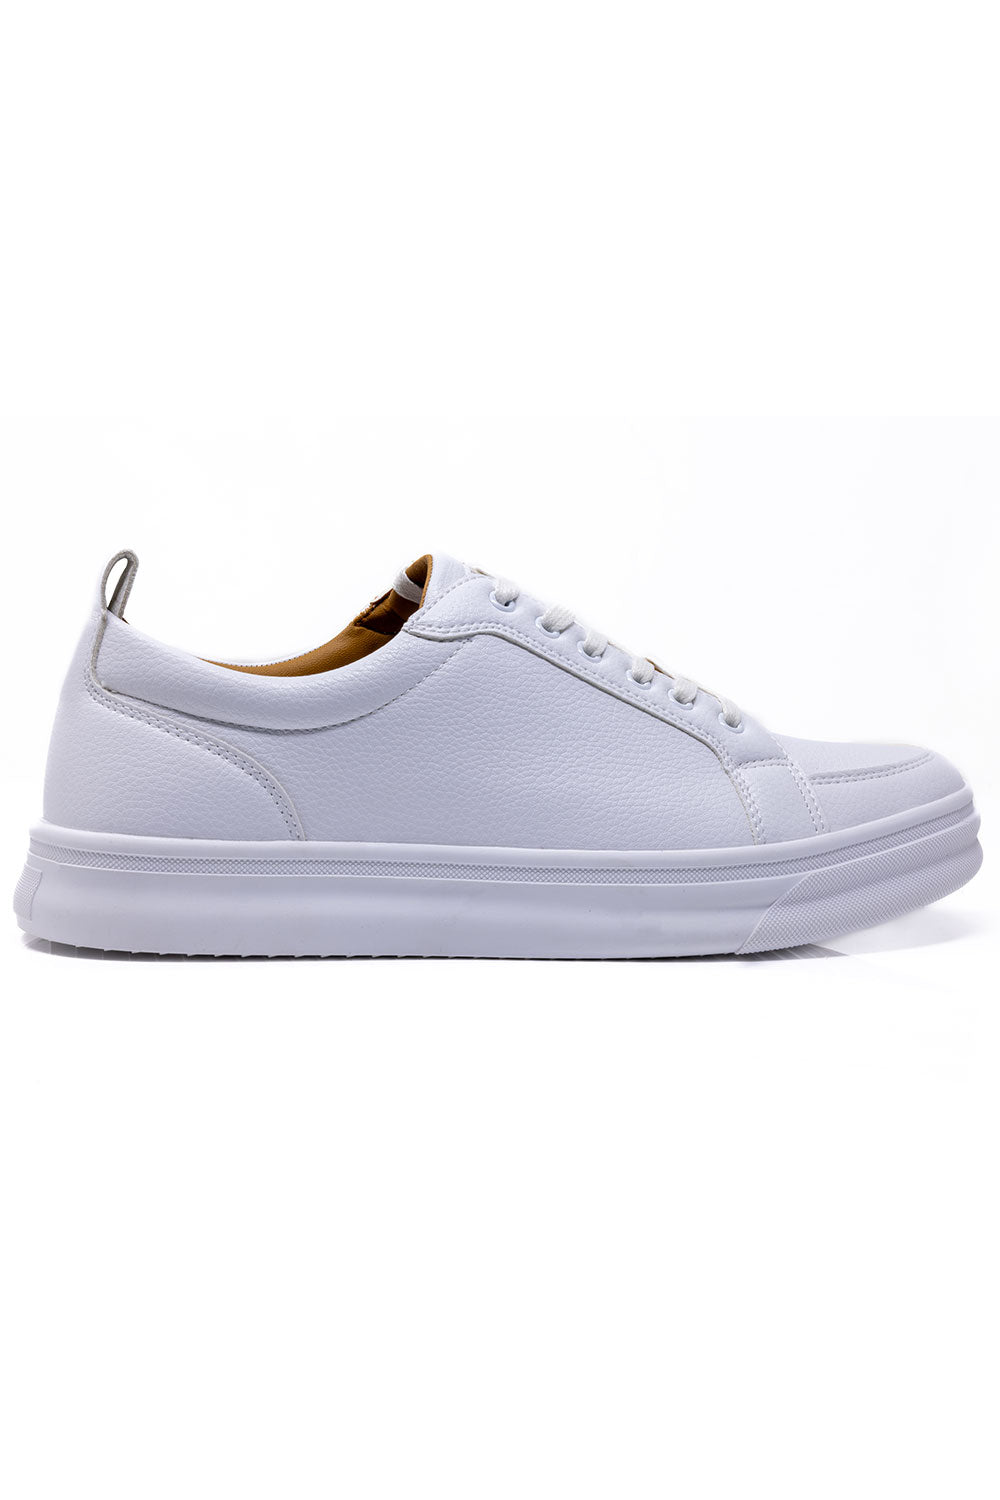 Barabas Men's premium low cut comfortable all-day sneakers 4SK05 White